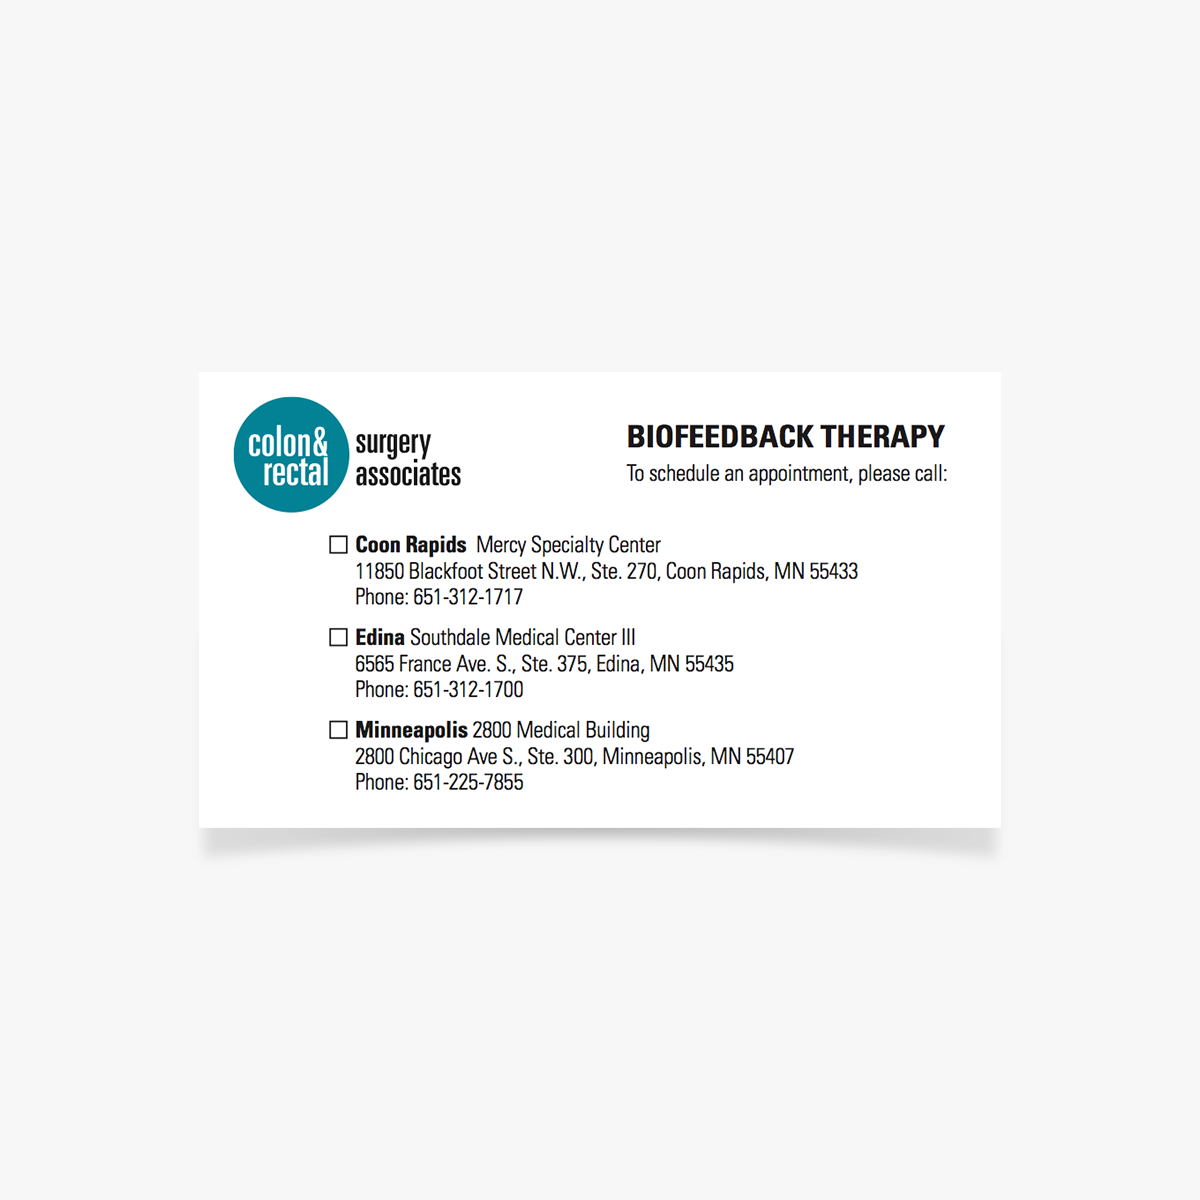 CORP-BC23 Biofeedback Appt Card